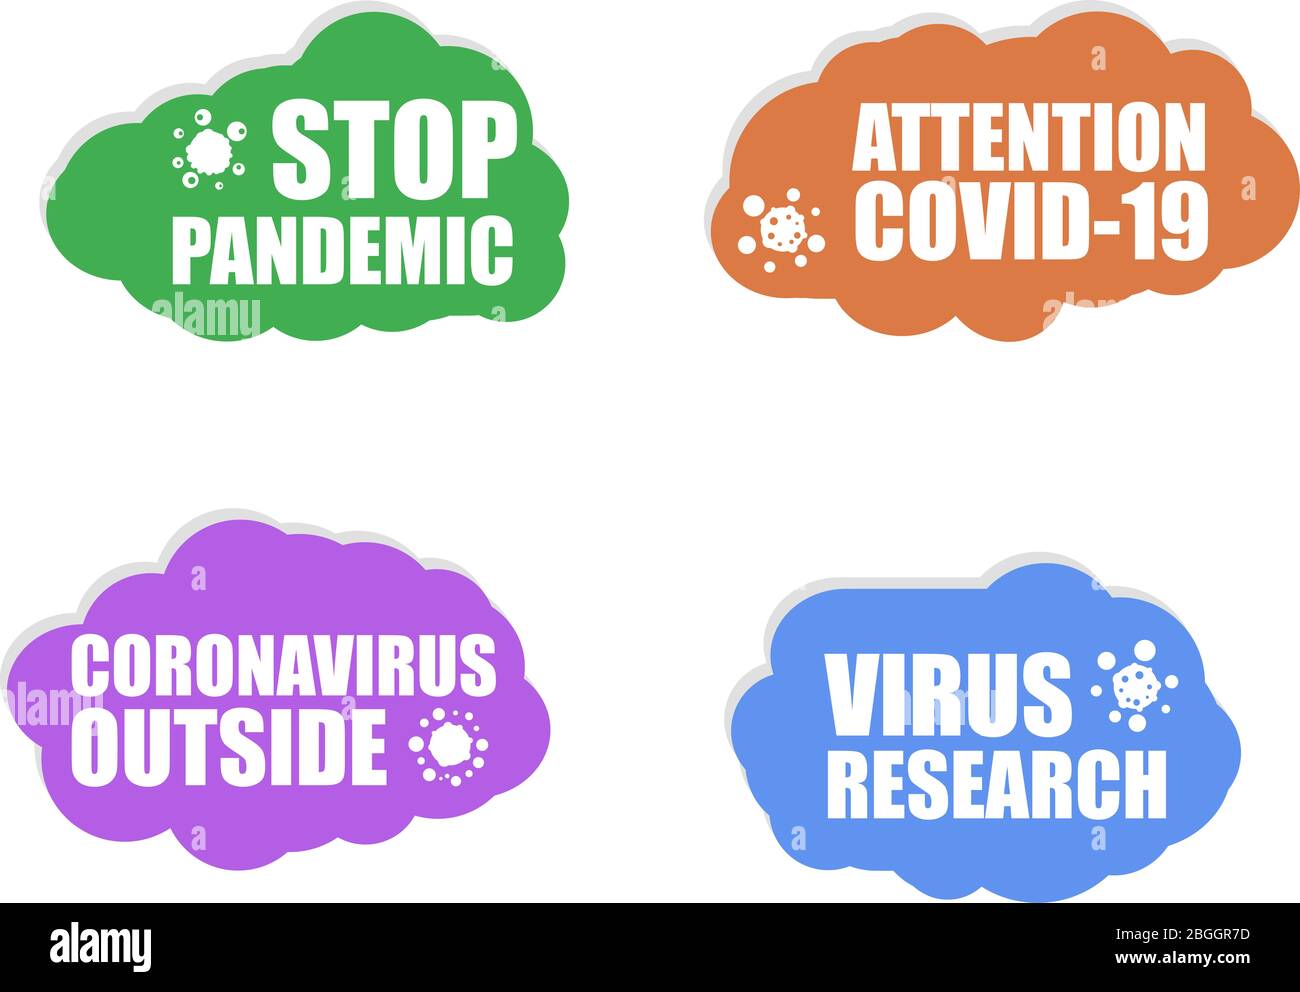 Coronavirus icon. Stop Pandemic icon. Coronavirus outside. Covid 19 attention. Virus research. Sign set isolated on white background Stock Photo